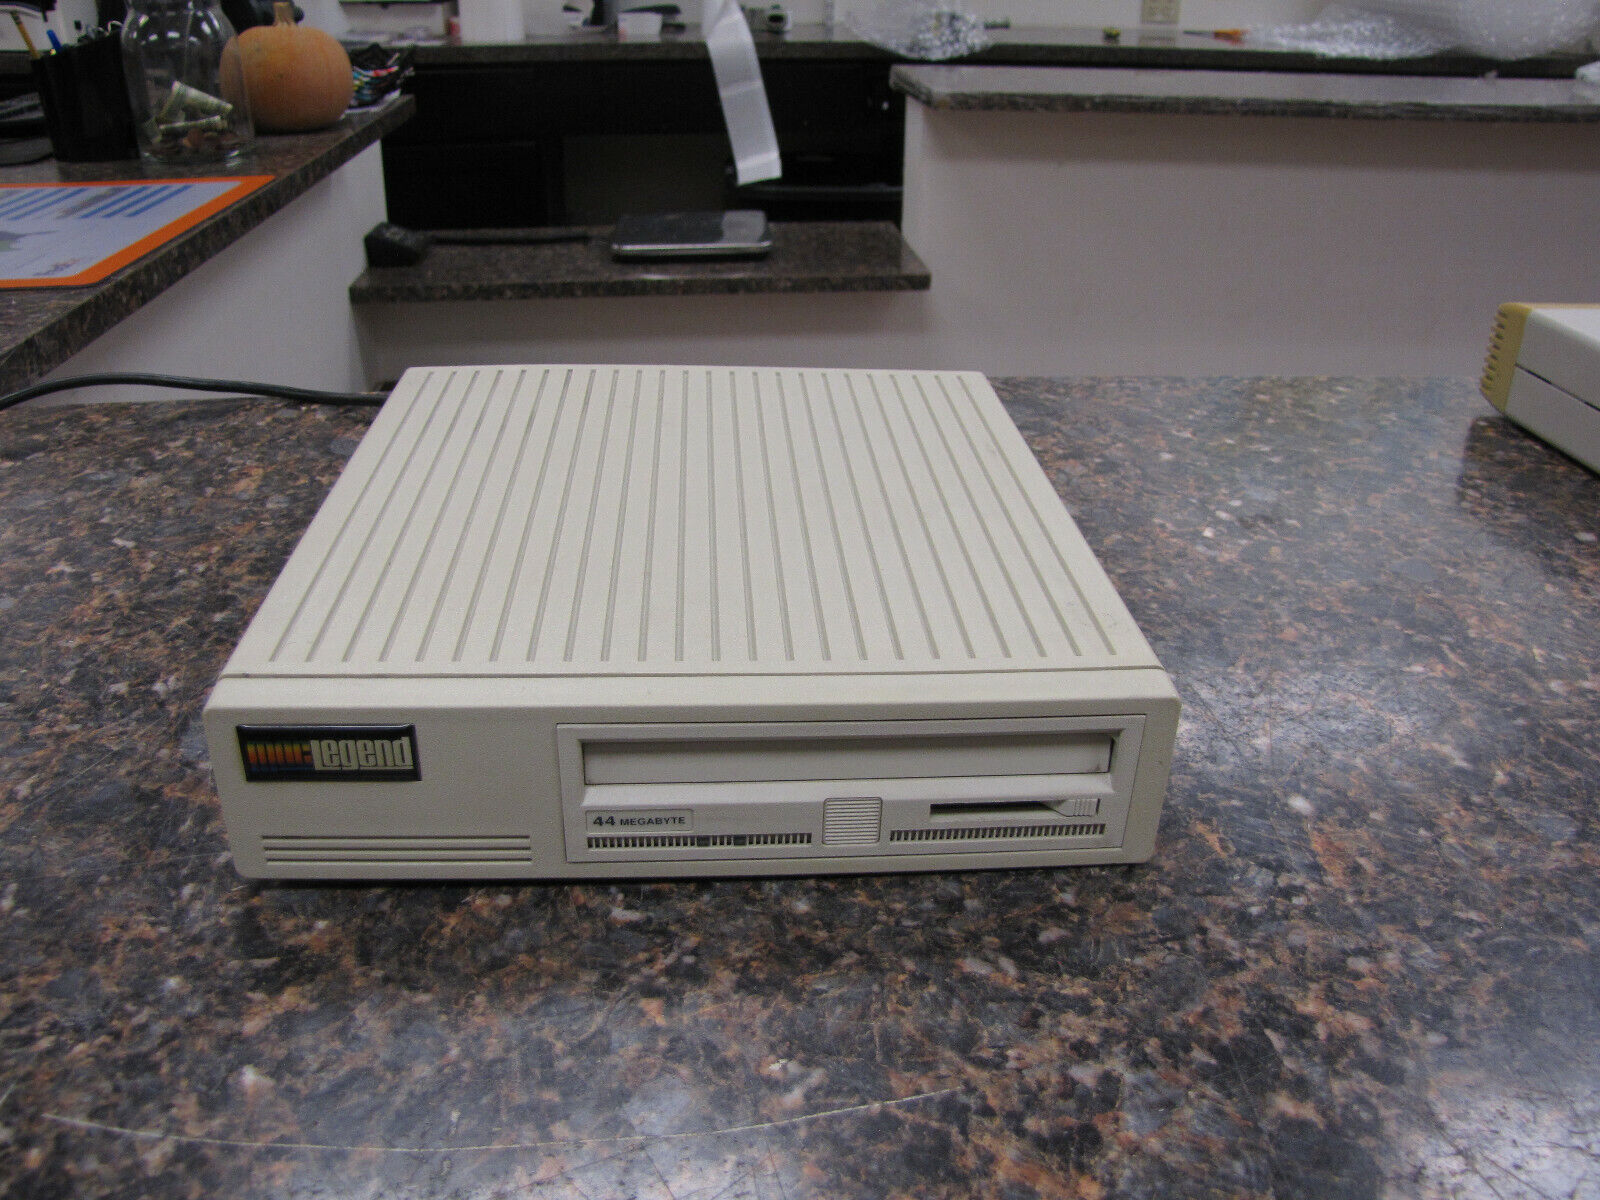 Vintage MacLegend Mac Legend 44MB Transportable External SCSI Drive